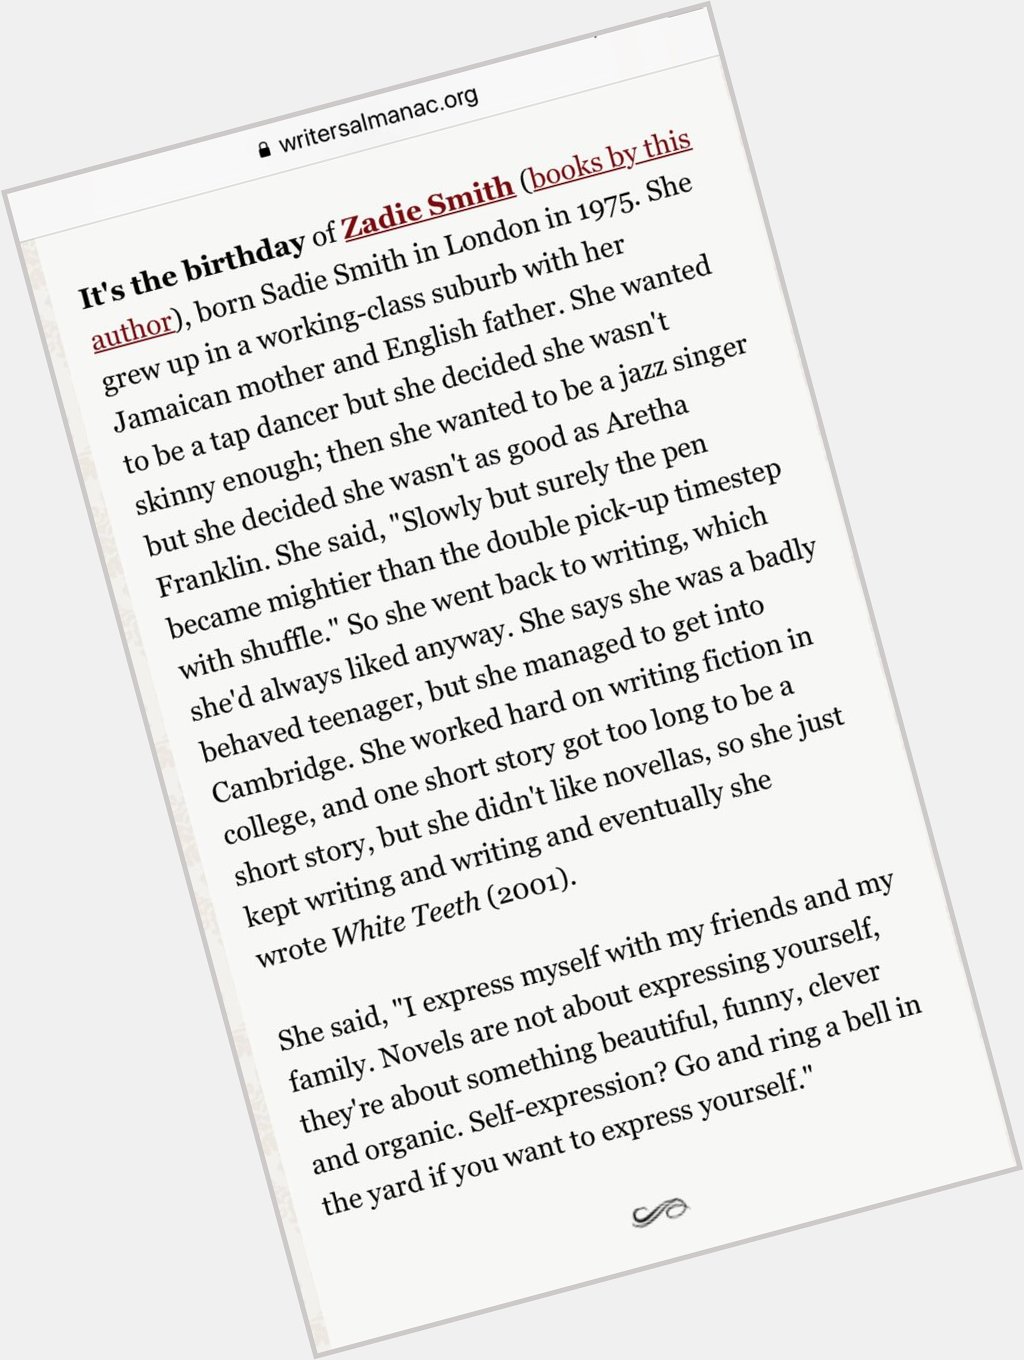 HAPPY BIRTHDAY TO Author Zadie Smith 